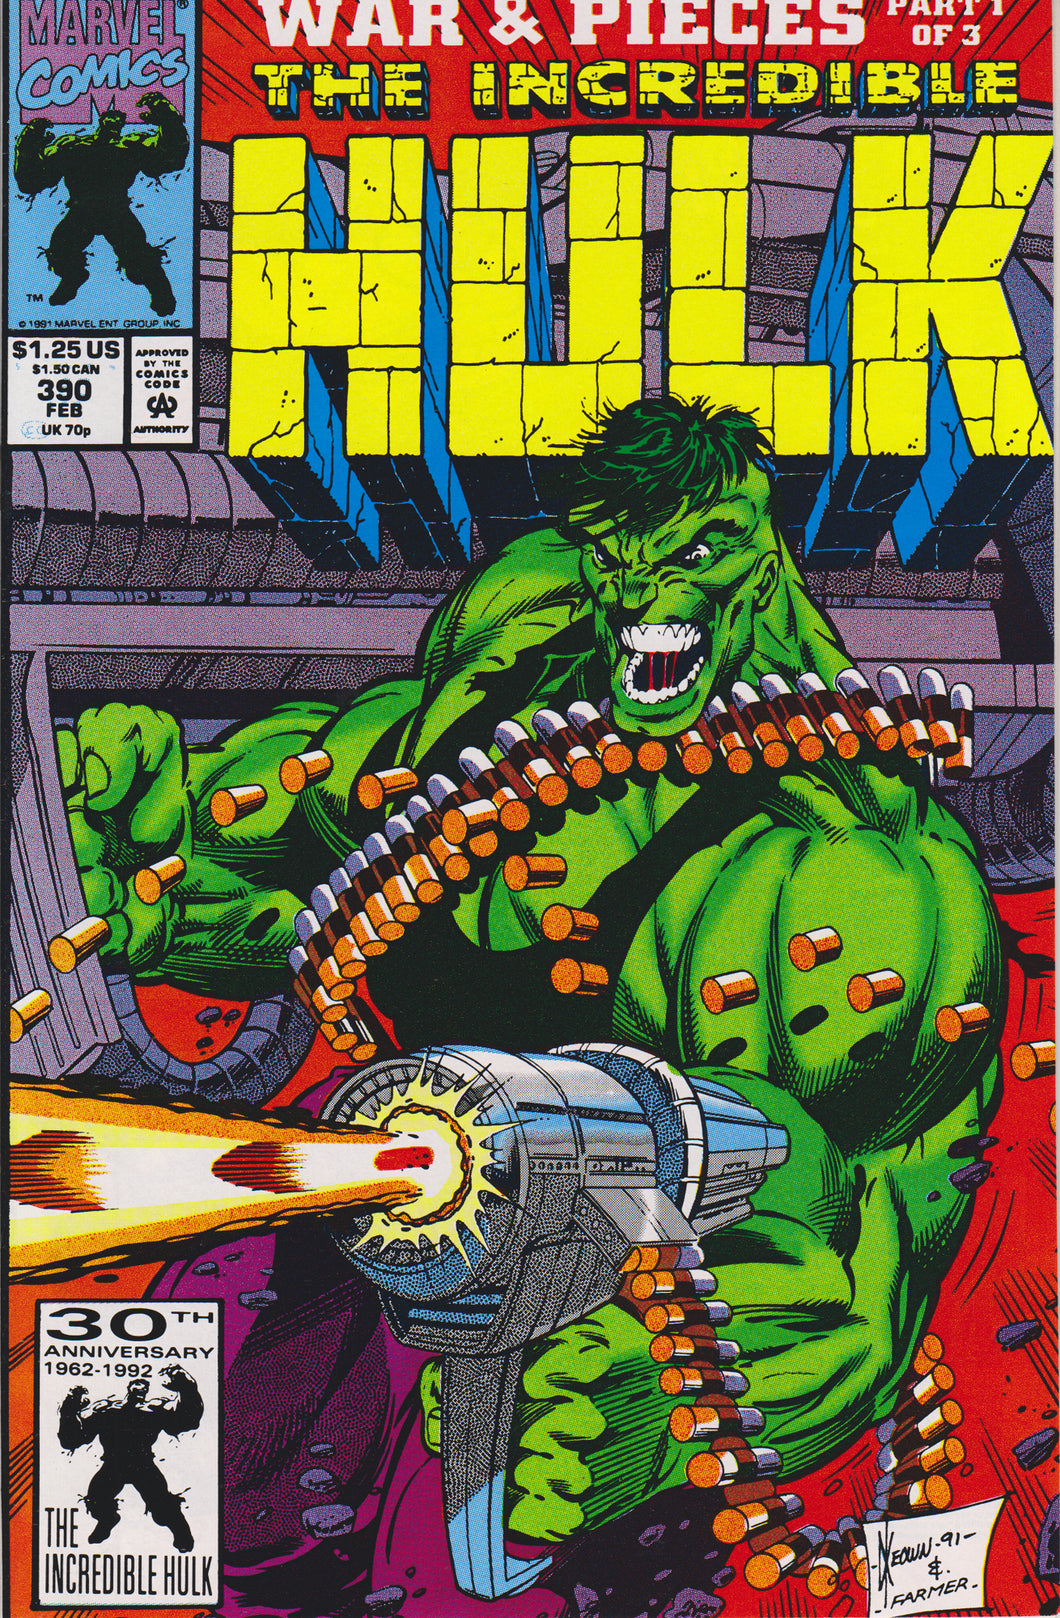 THE INCREDIBLE HULK #390 COMIC BOOK ~ Marvel Comics